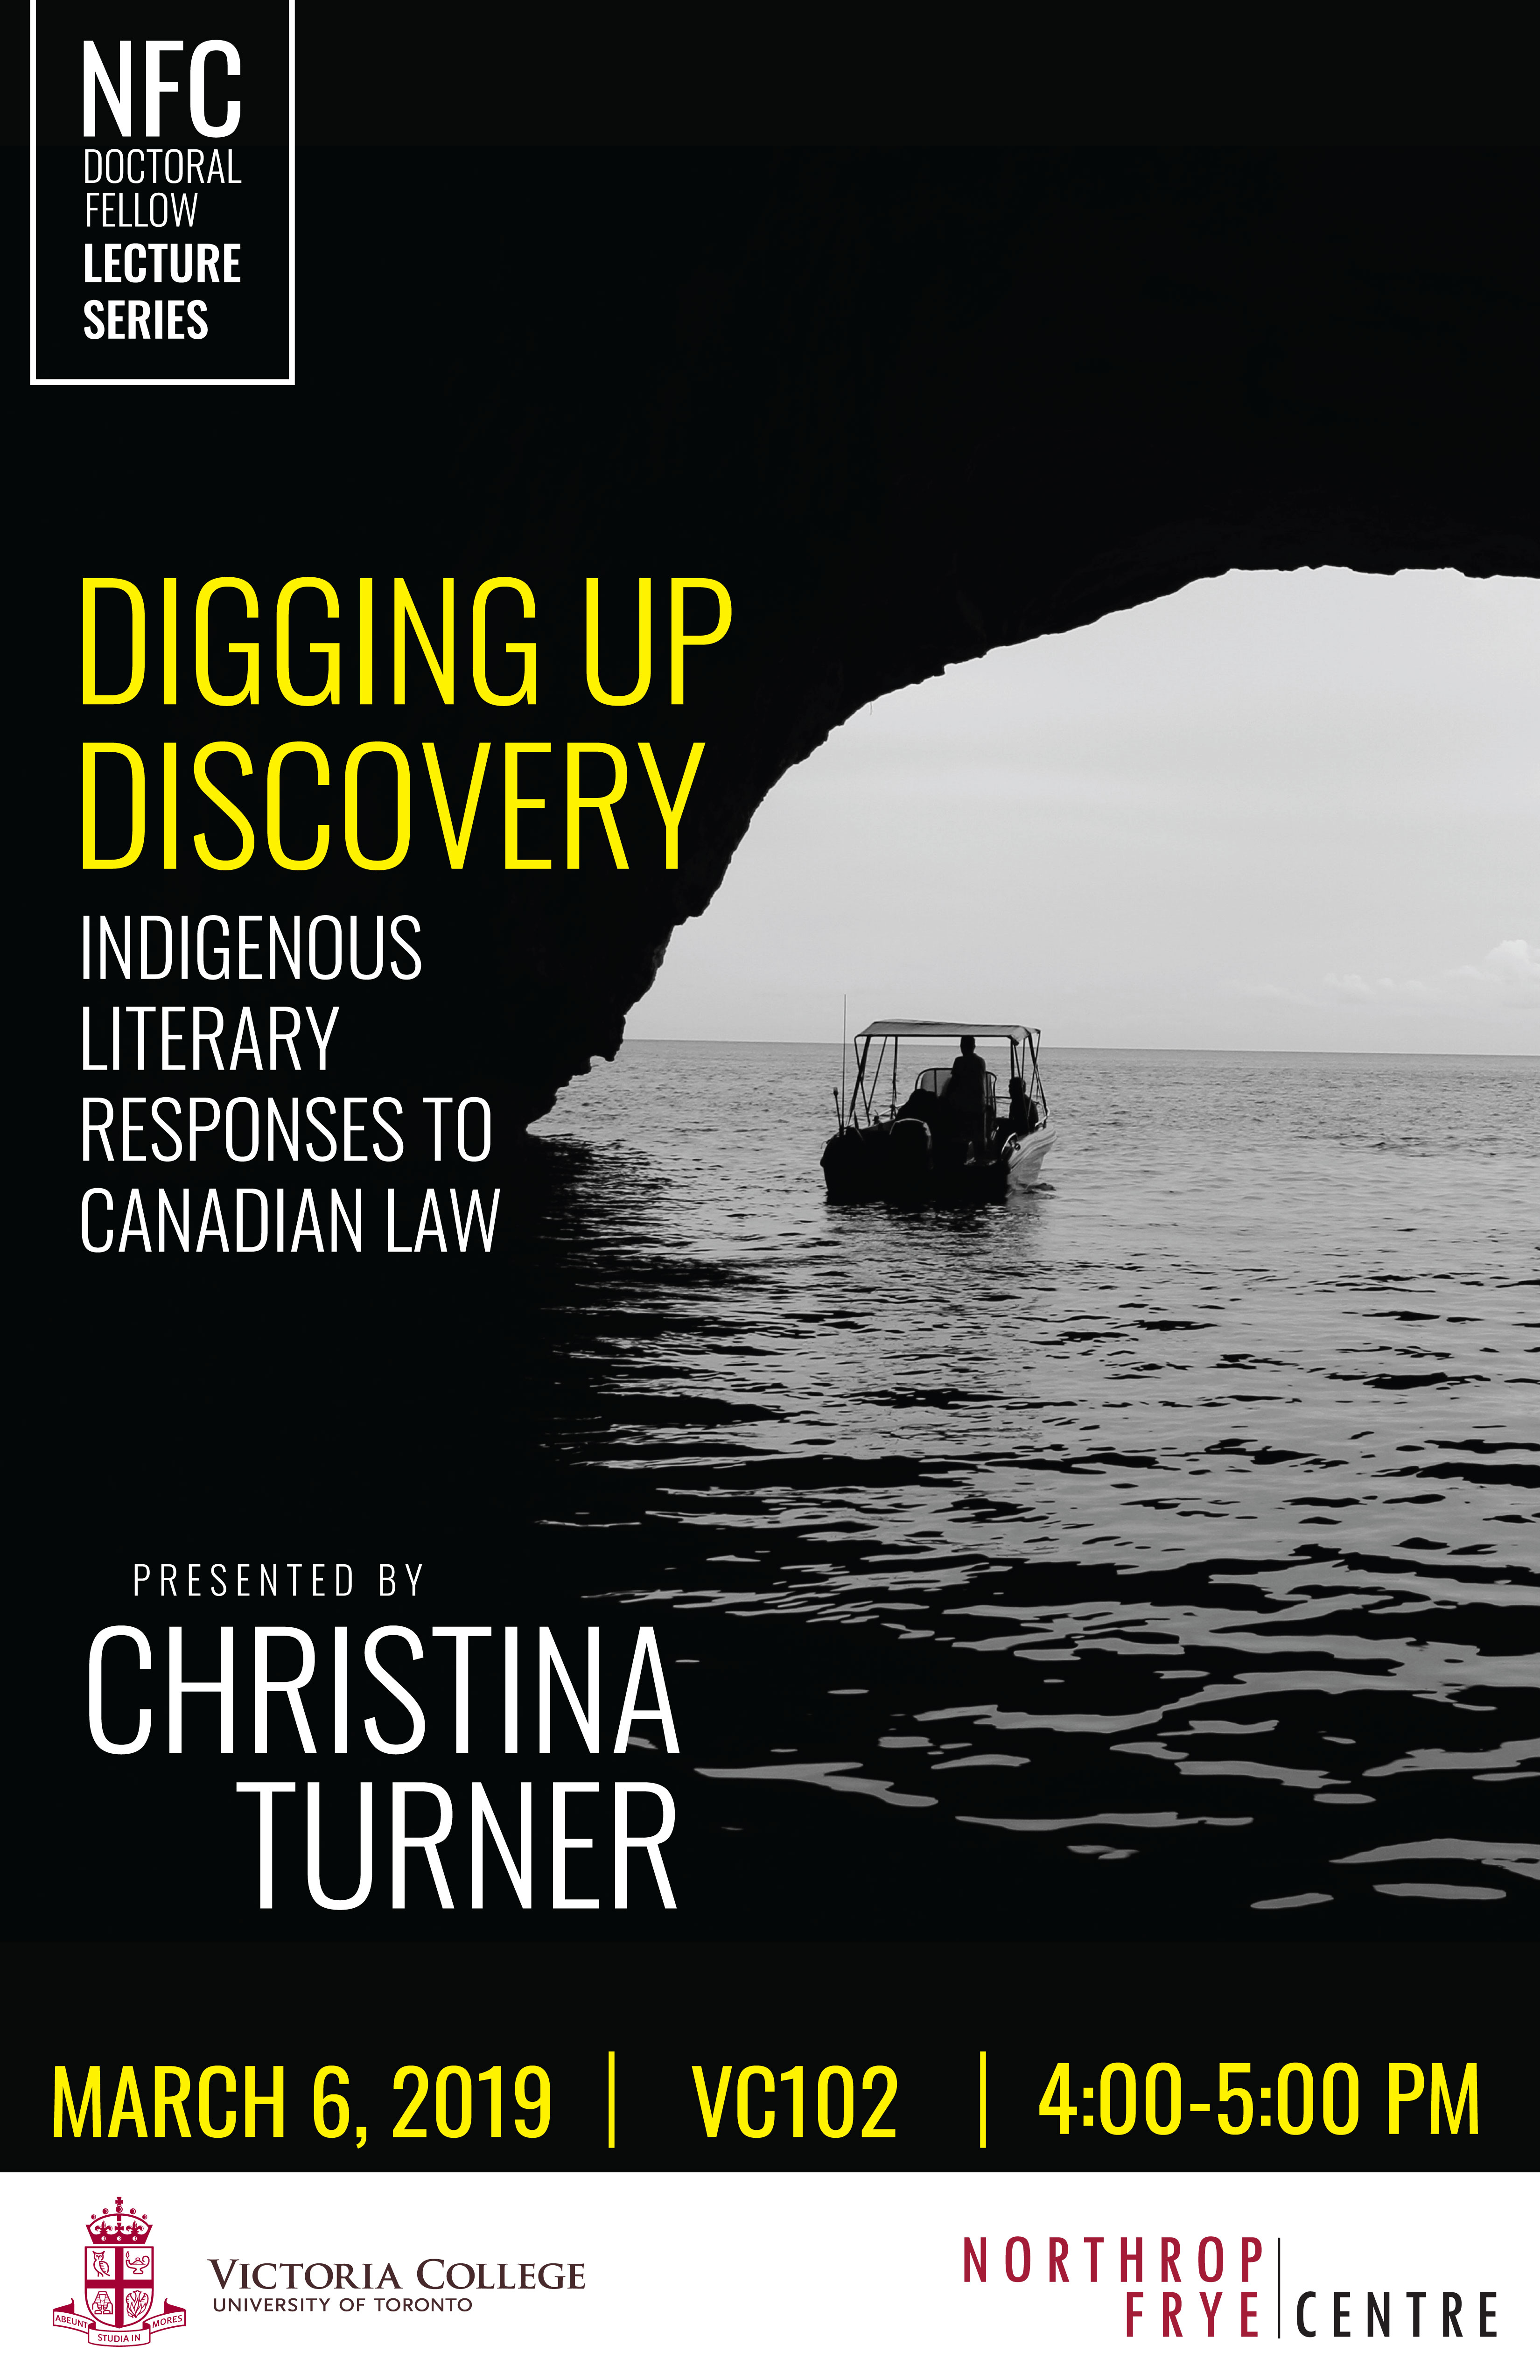 Mar. 6, 2019 | Digging up Discovery | Christina Turner